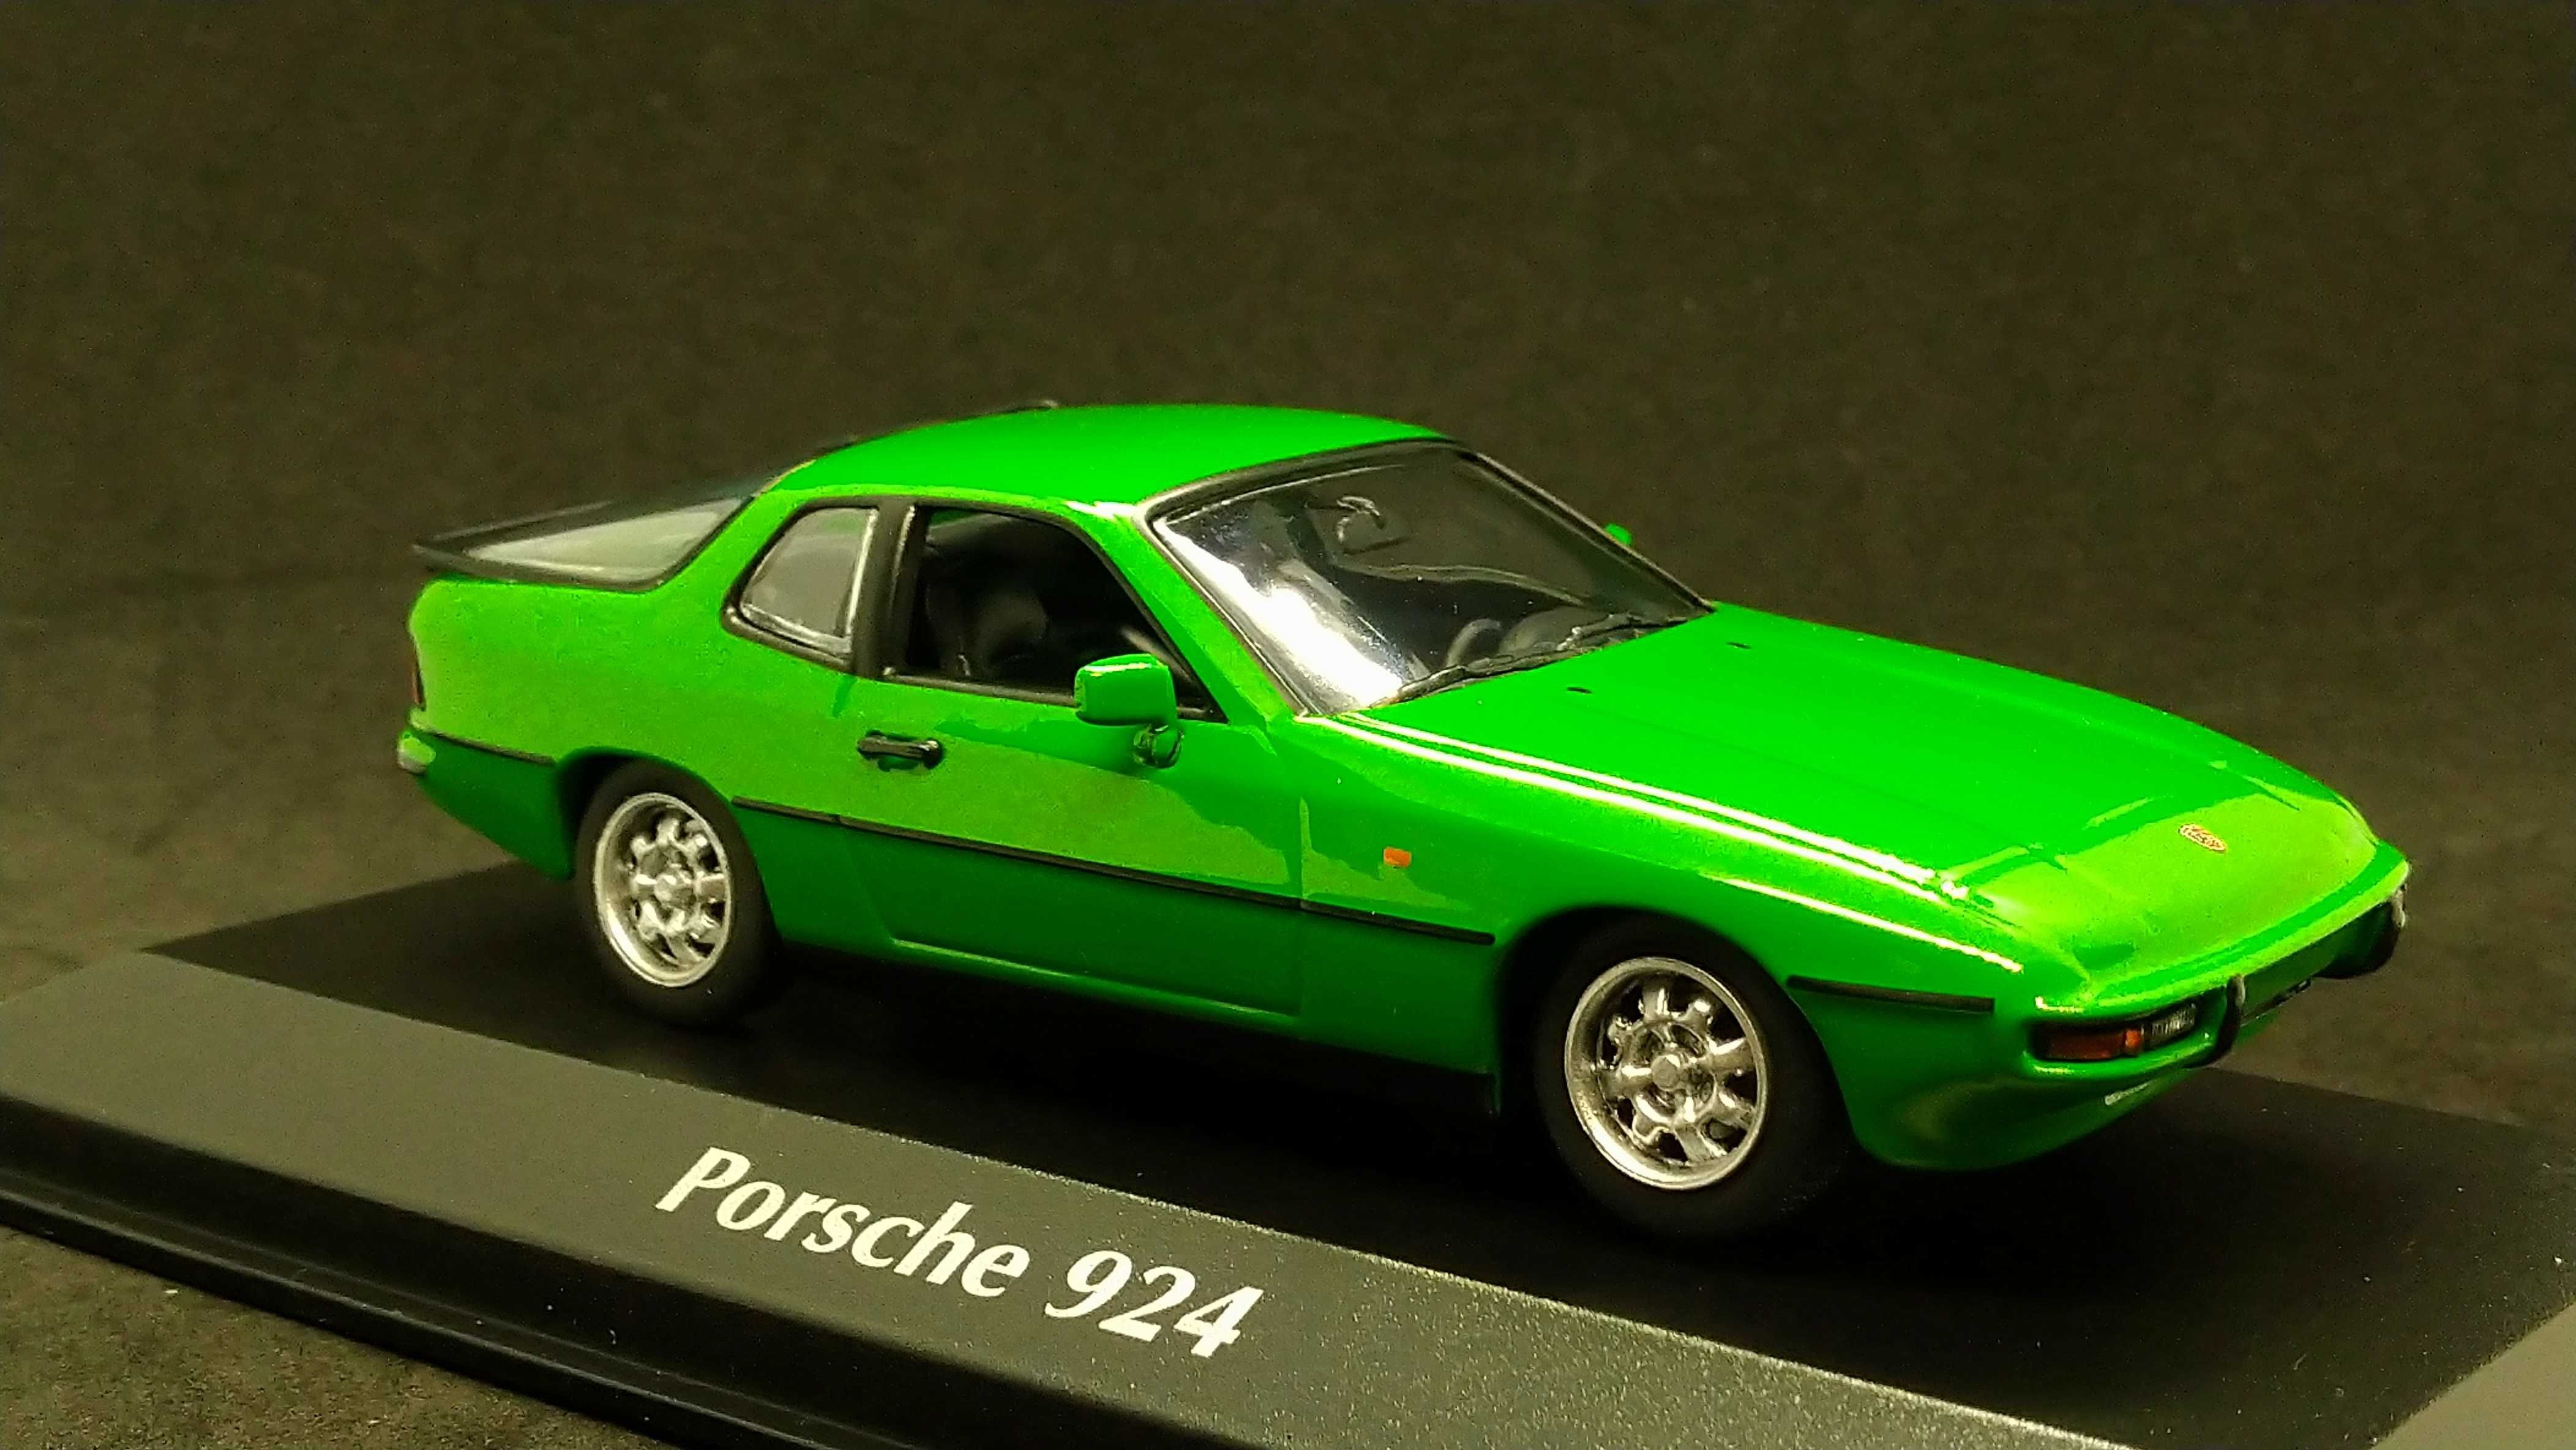 Macheta Porsche 924 Maxichamps 1:43